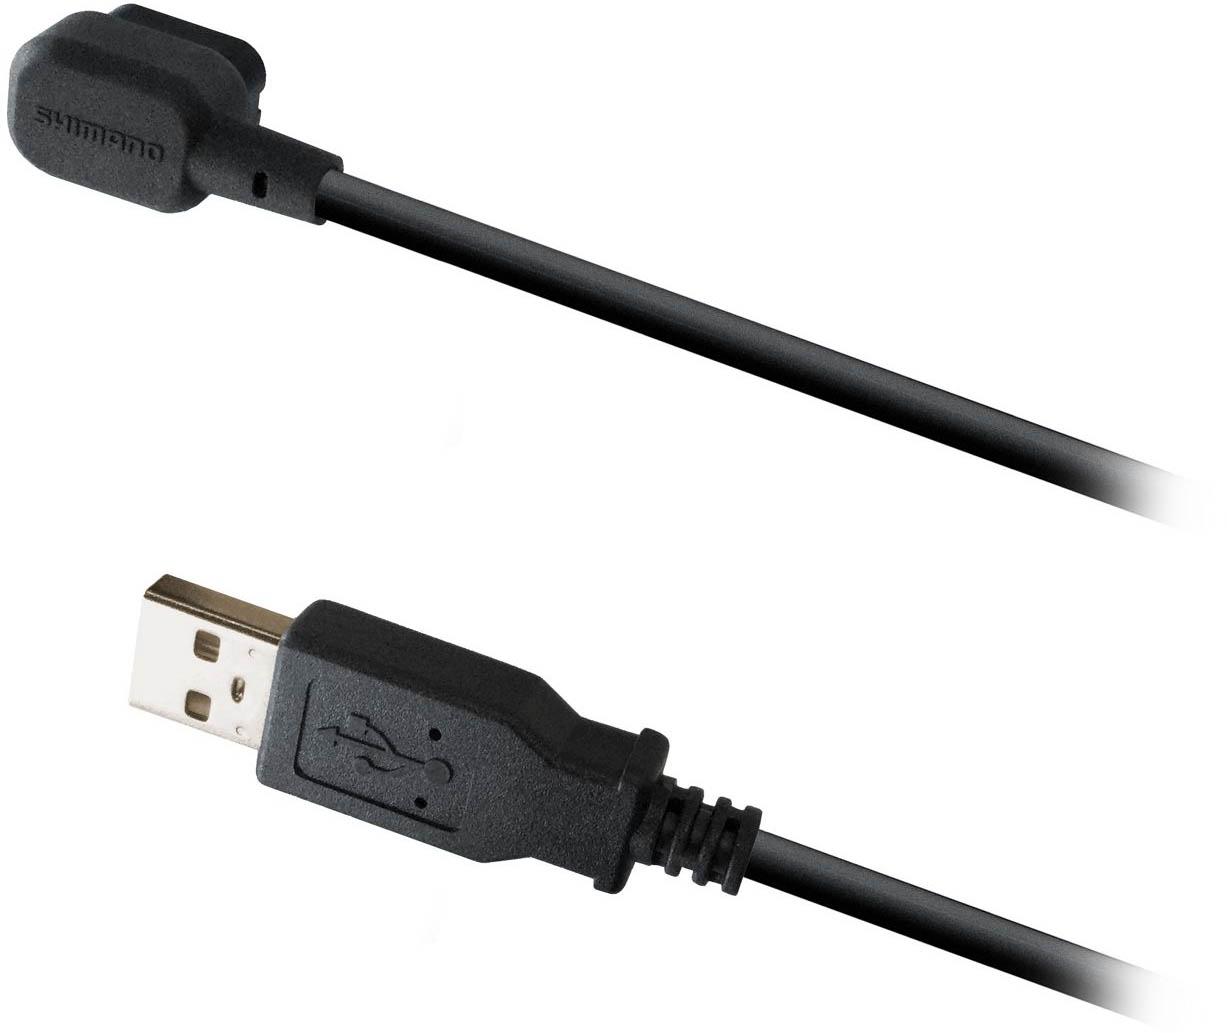 Shimano Ec300 Di2 Charging Cable  Black